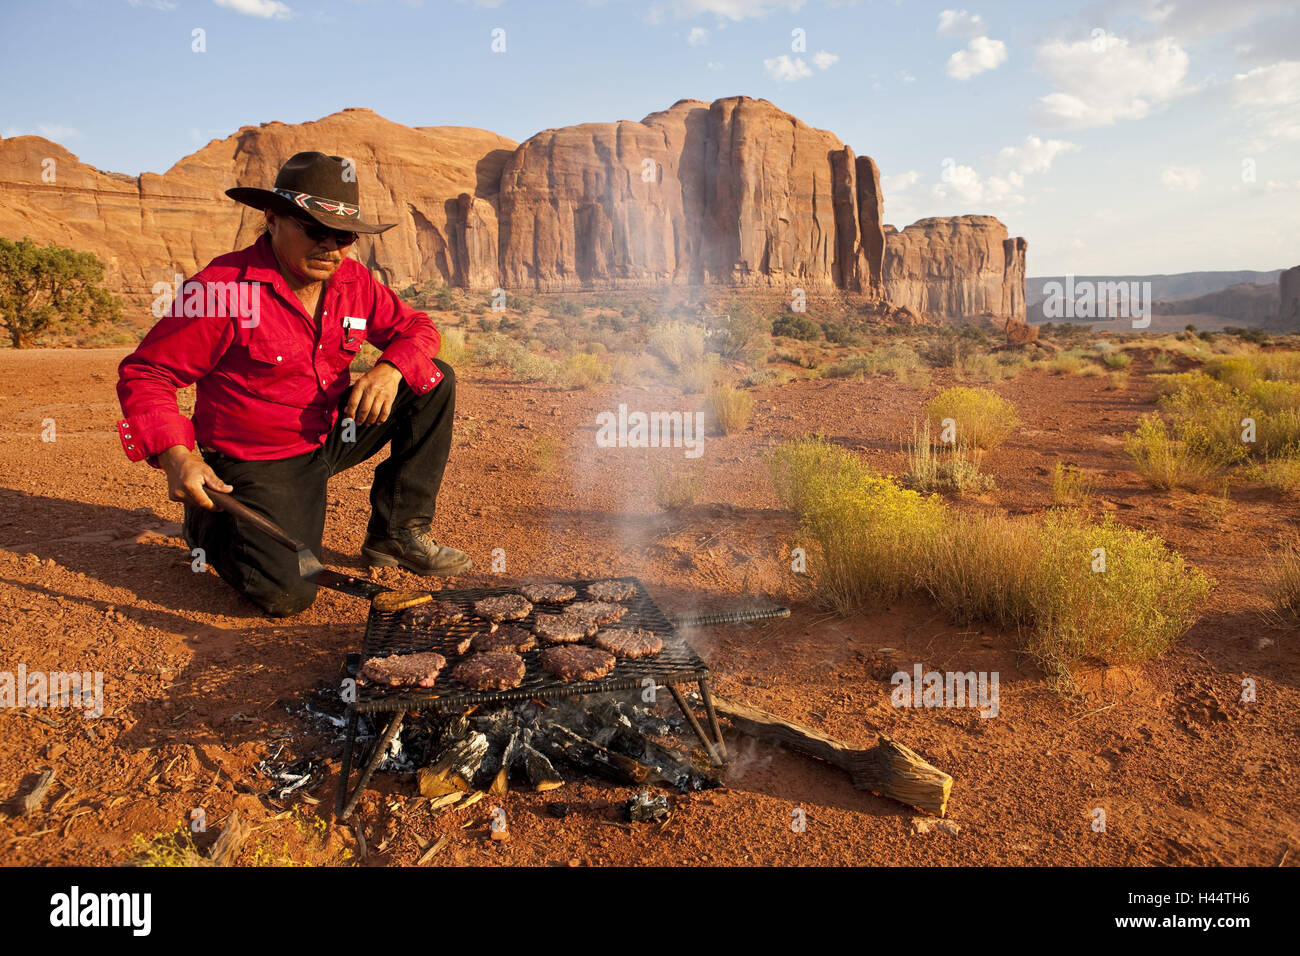 The USA, Arizona, Utah, Four corner region, Navajo nation reserve, Colorado plateau, monument Valley, Indian, campfire, barbecue, Stock Photo